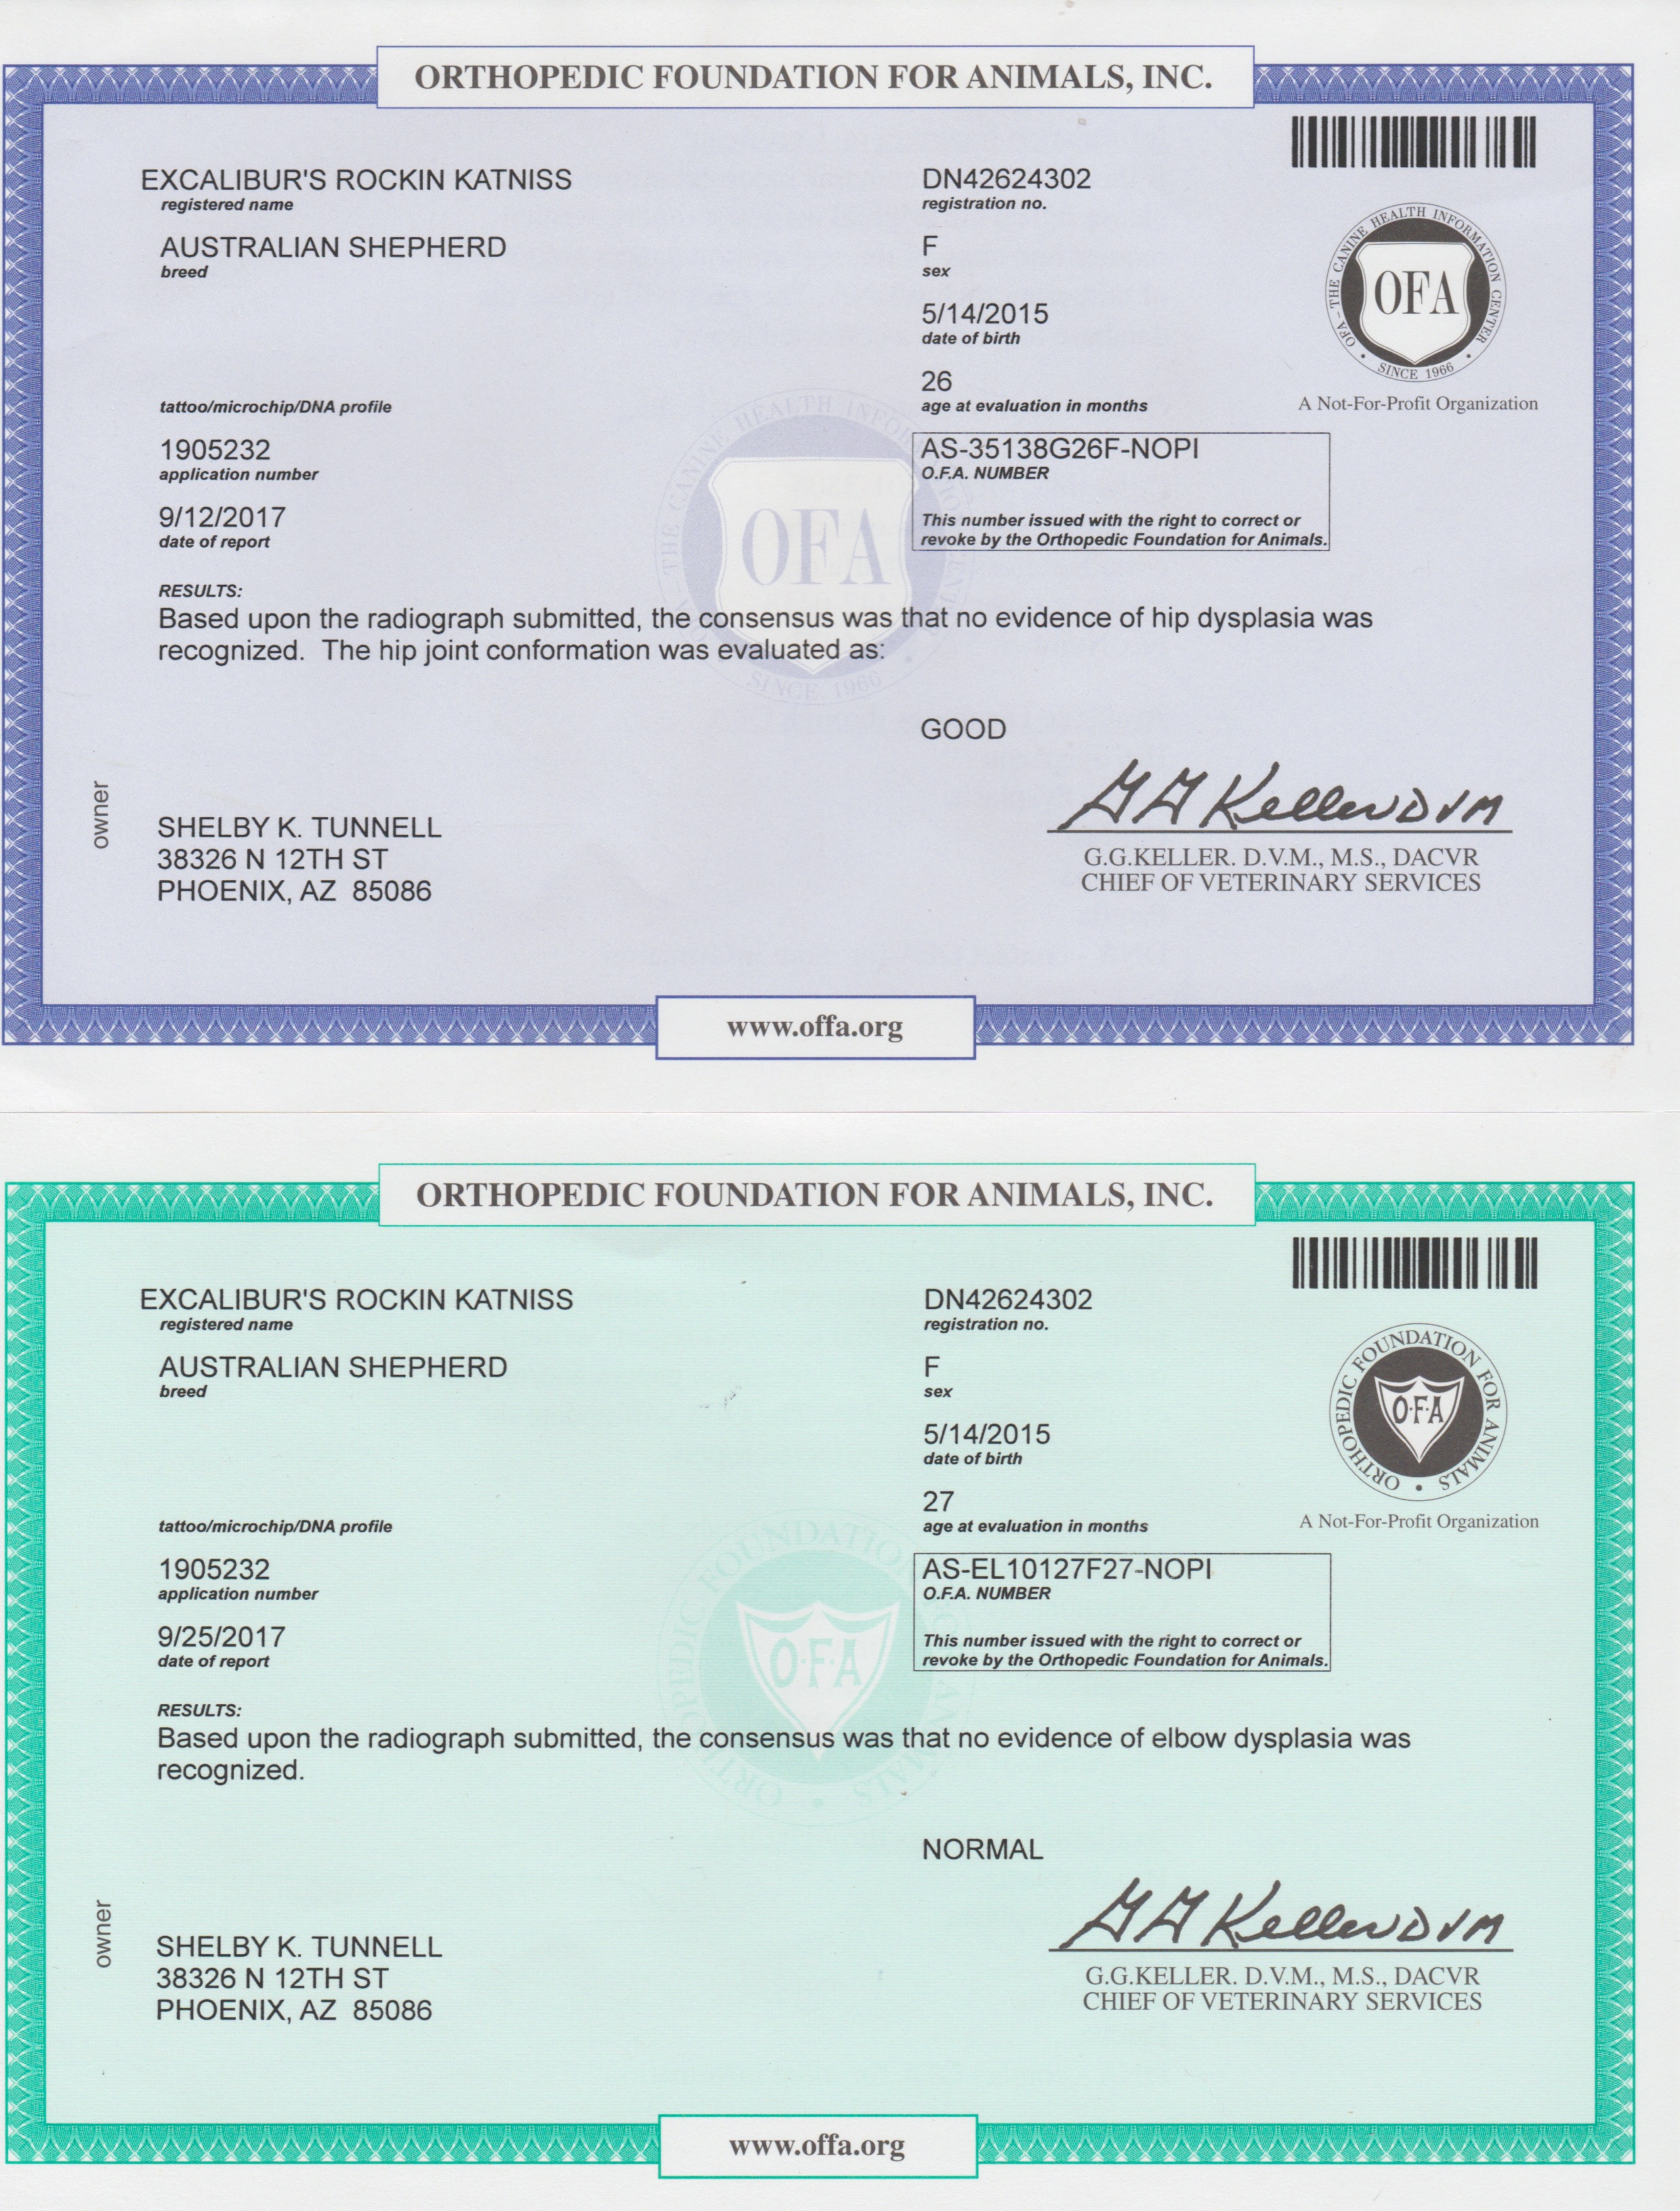 Excalibur's Rockin Katniss' OFA Certificates